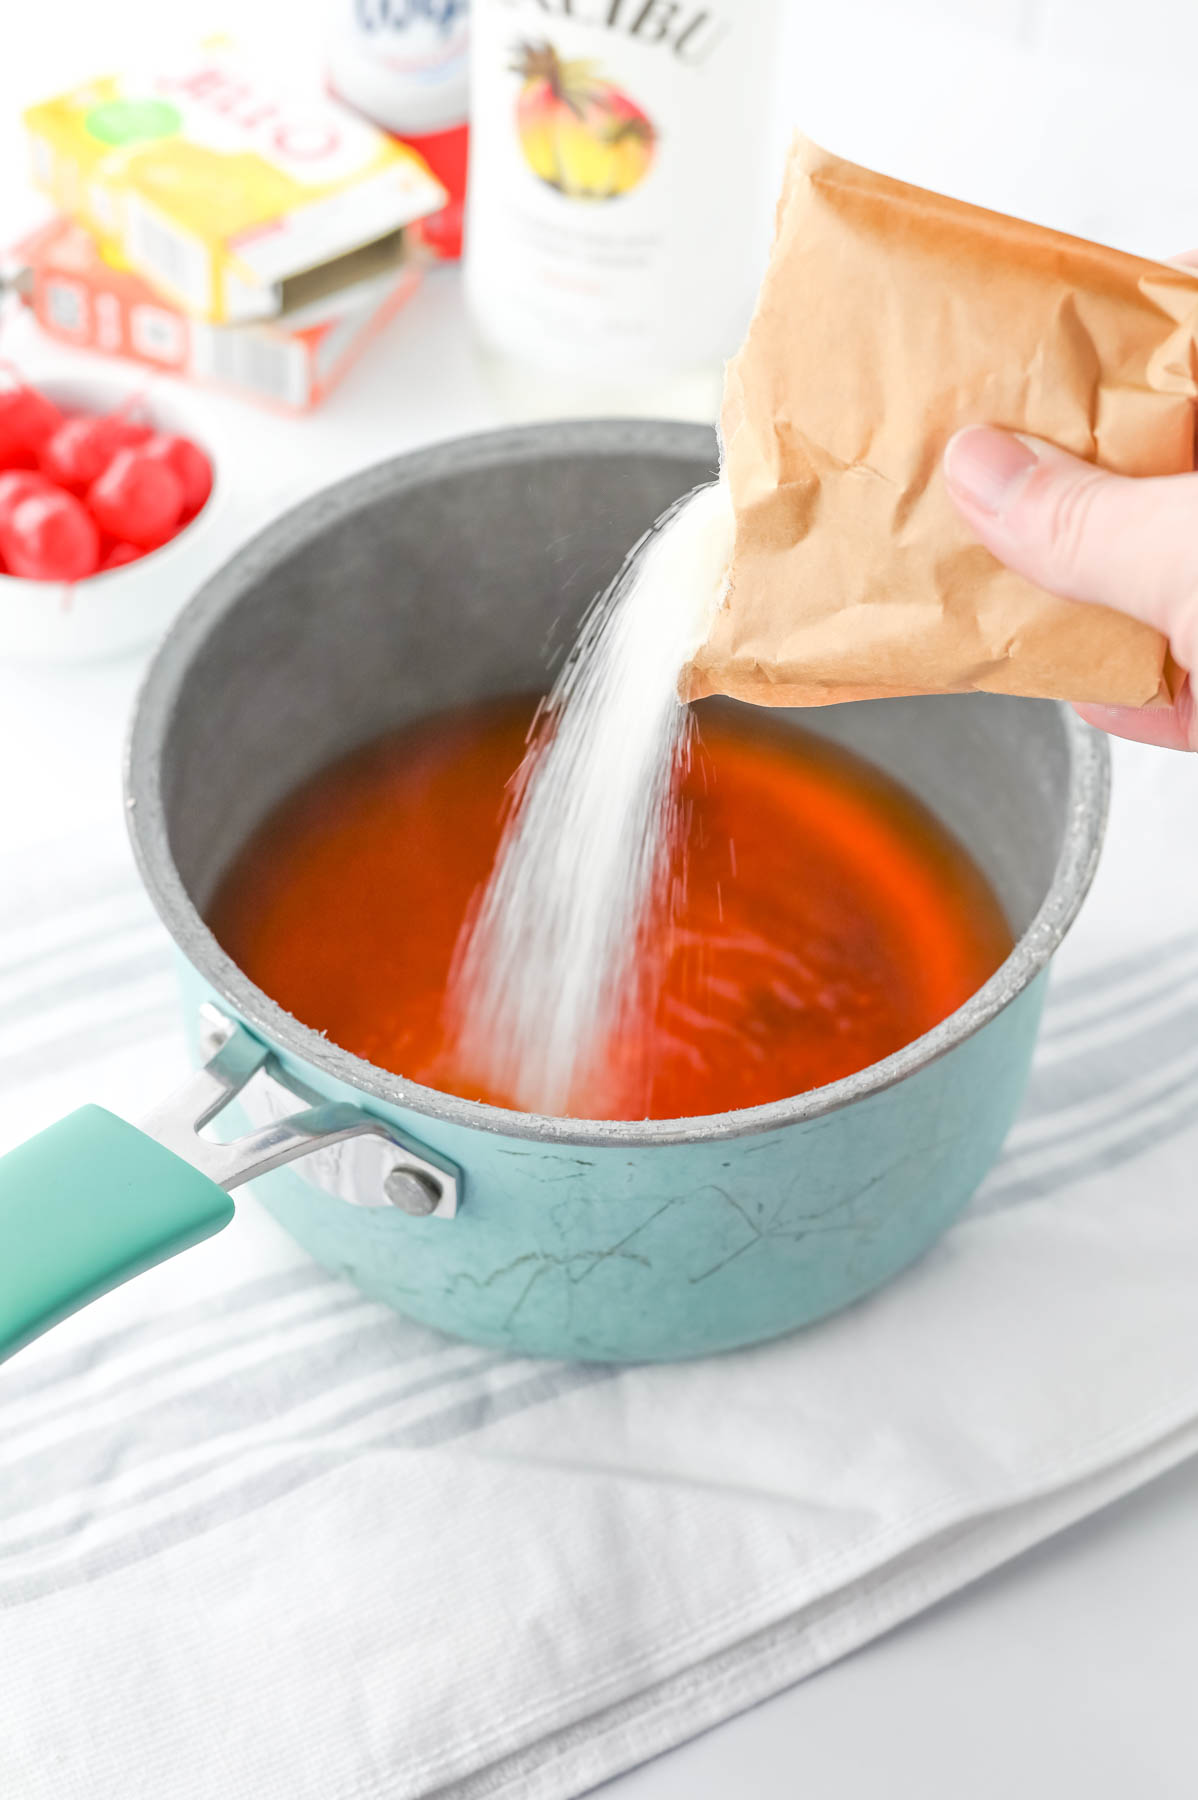 A person is pouring jello powder into a pan.